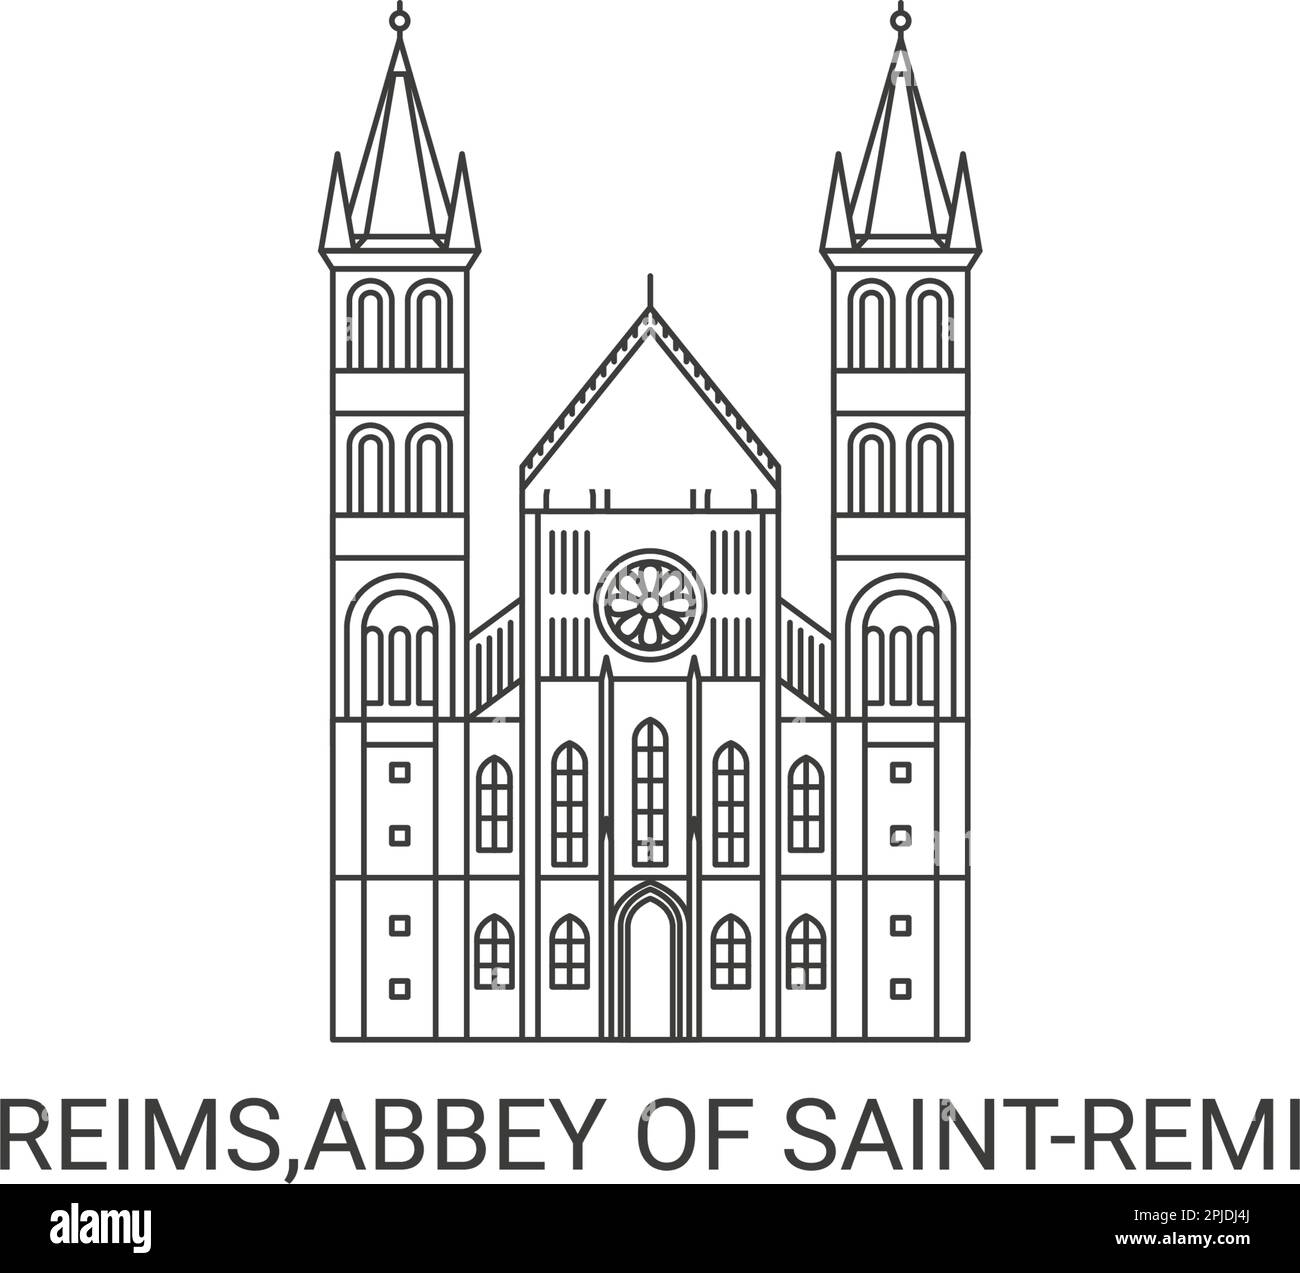 France, Reims,Abbey Of Saintremi, travel landmark vector illustration Stock Vector